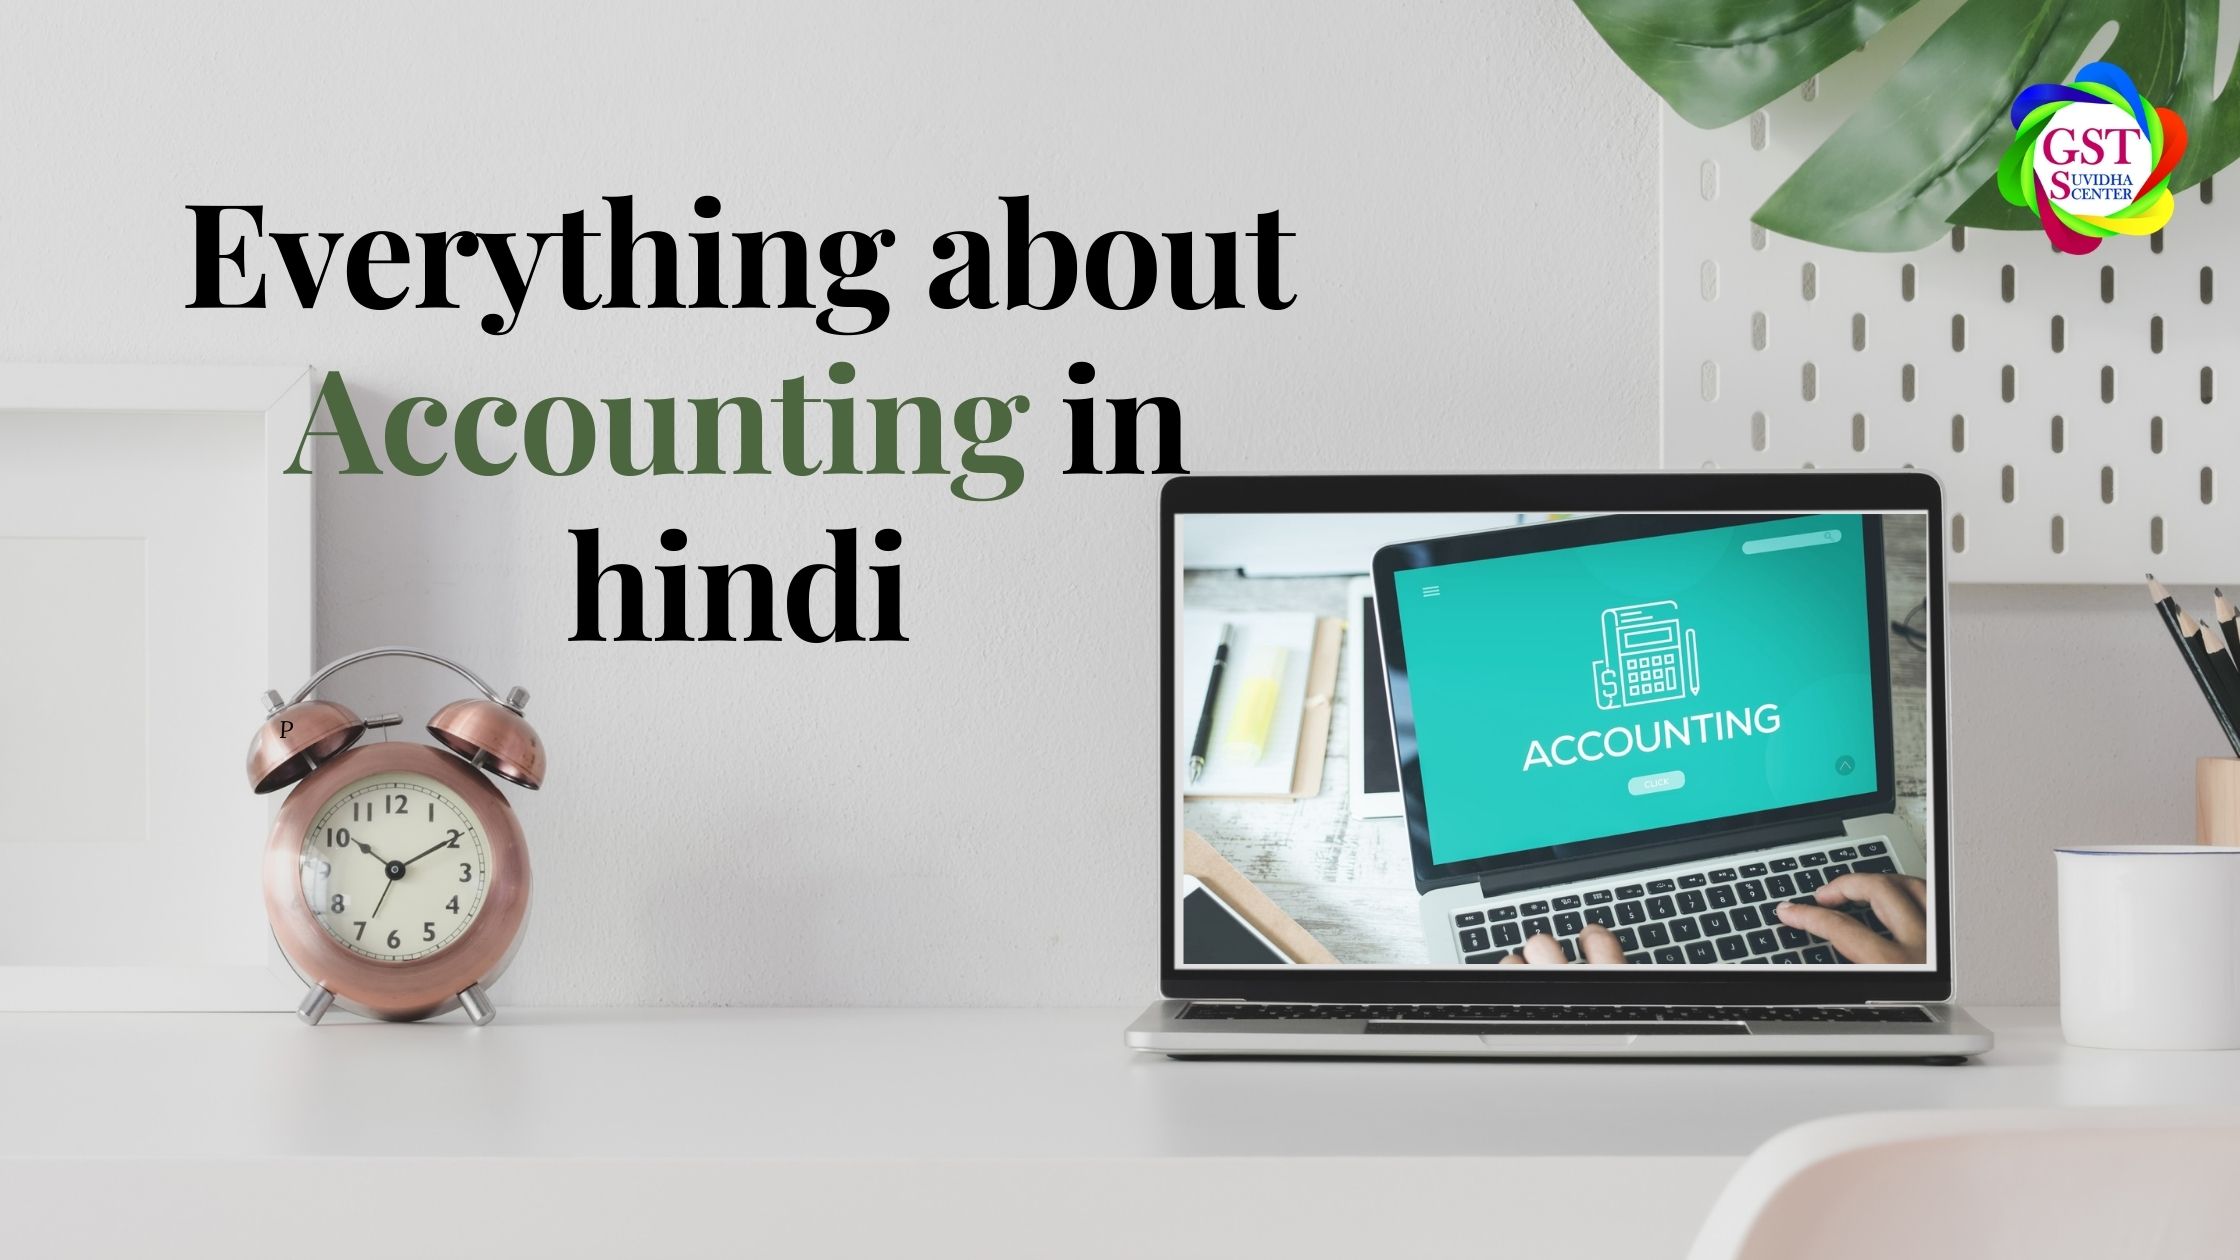 GST Suvidha Center and Accounting in Hindi